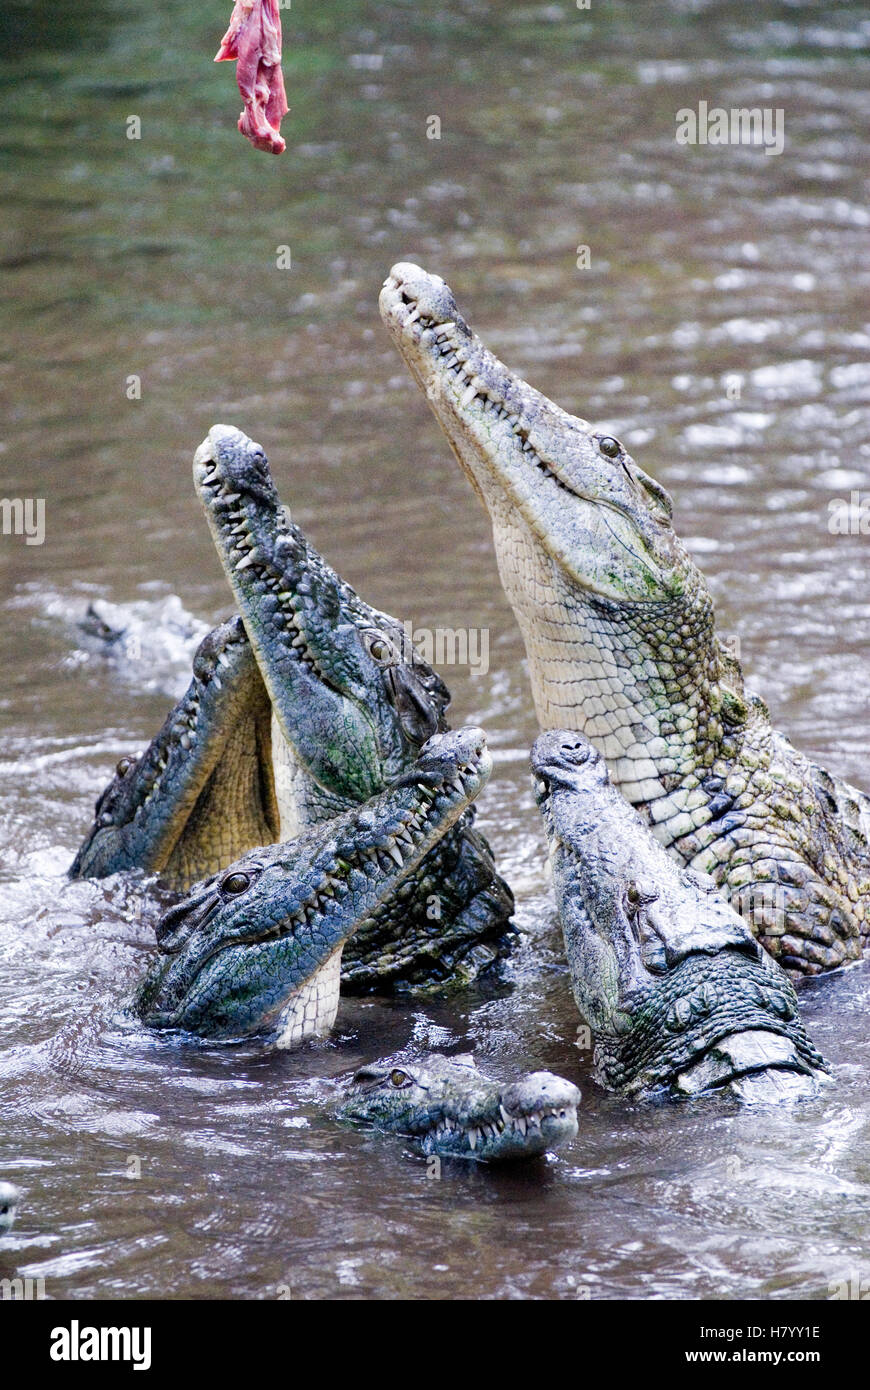 Crocodiles (Crocodilia) in Haller Park in Mombasa, Kenya, Africa Stock Photo